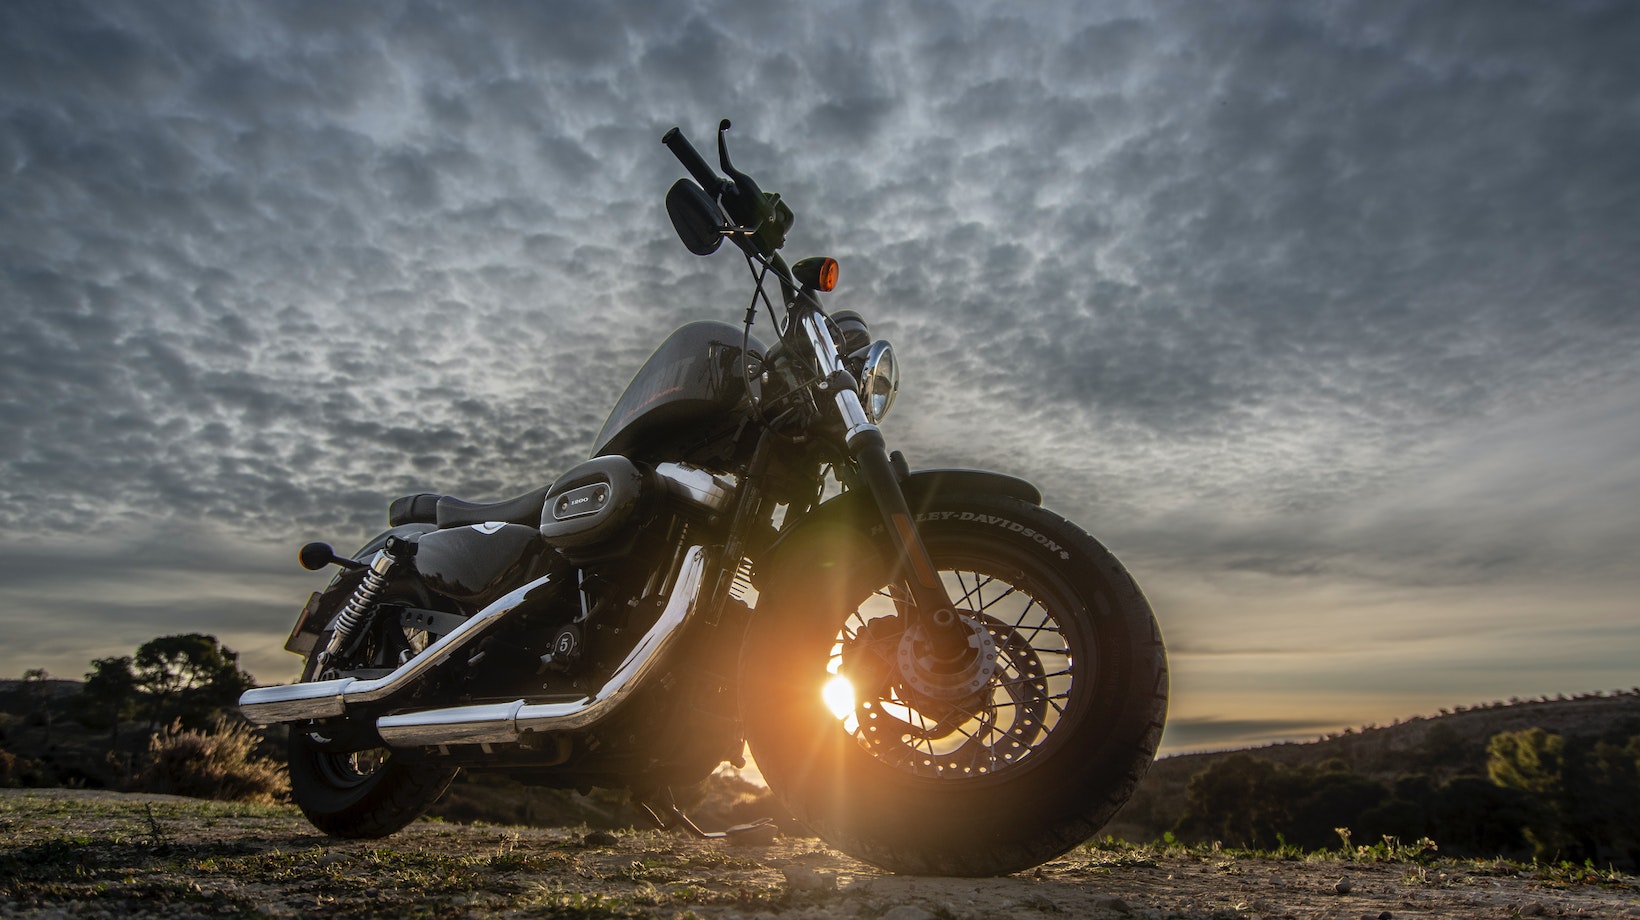 honda motorcycle 2015 models